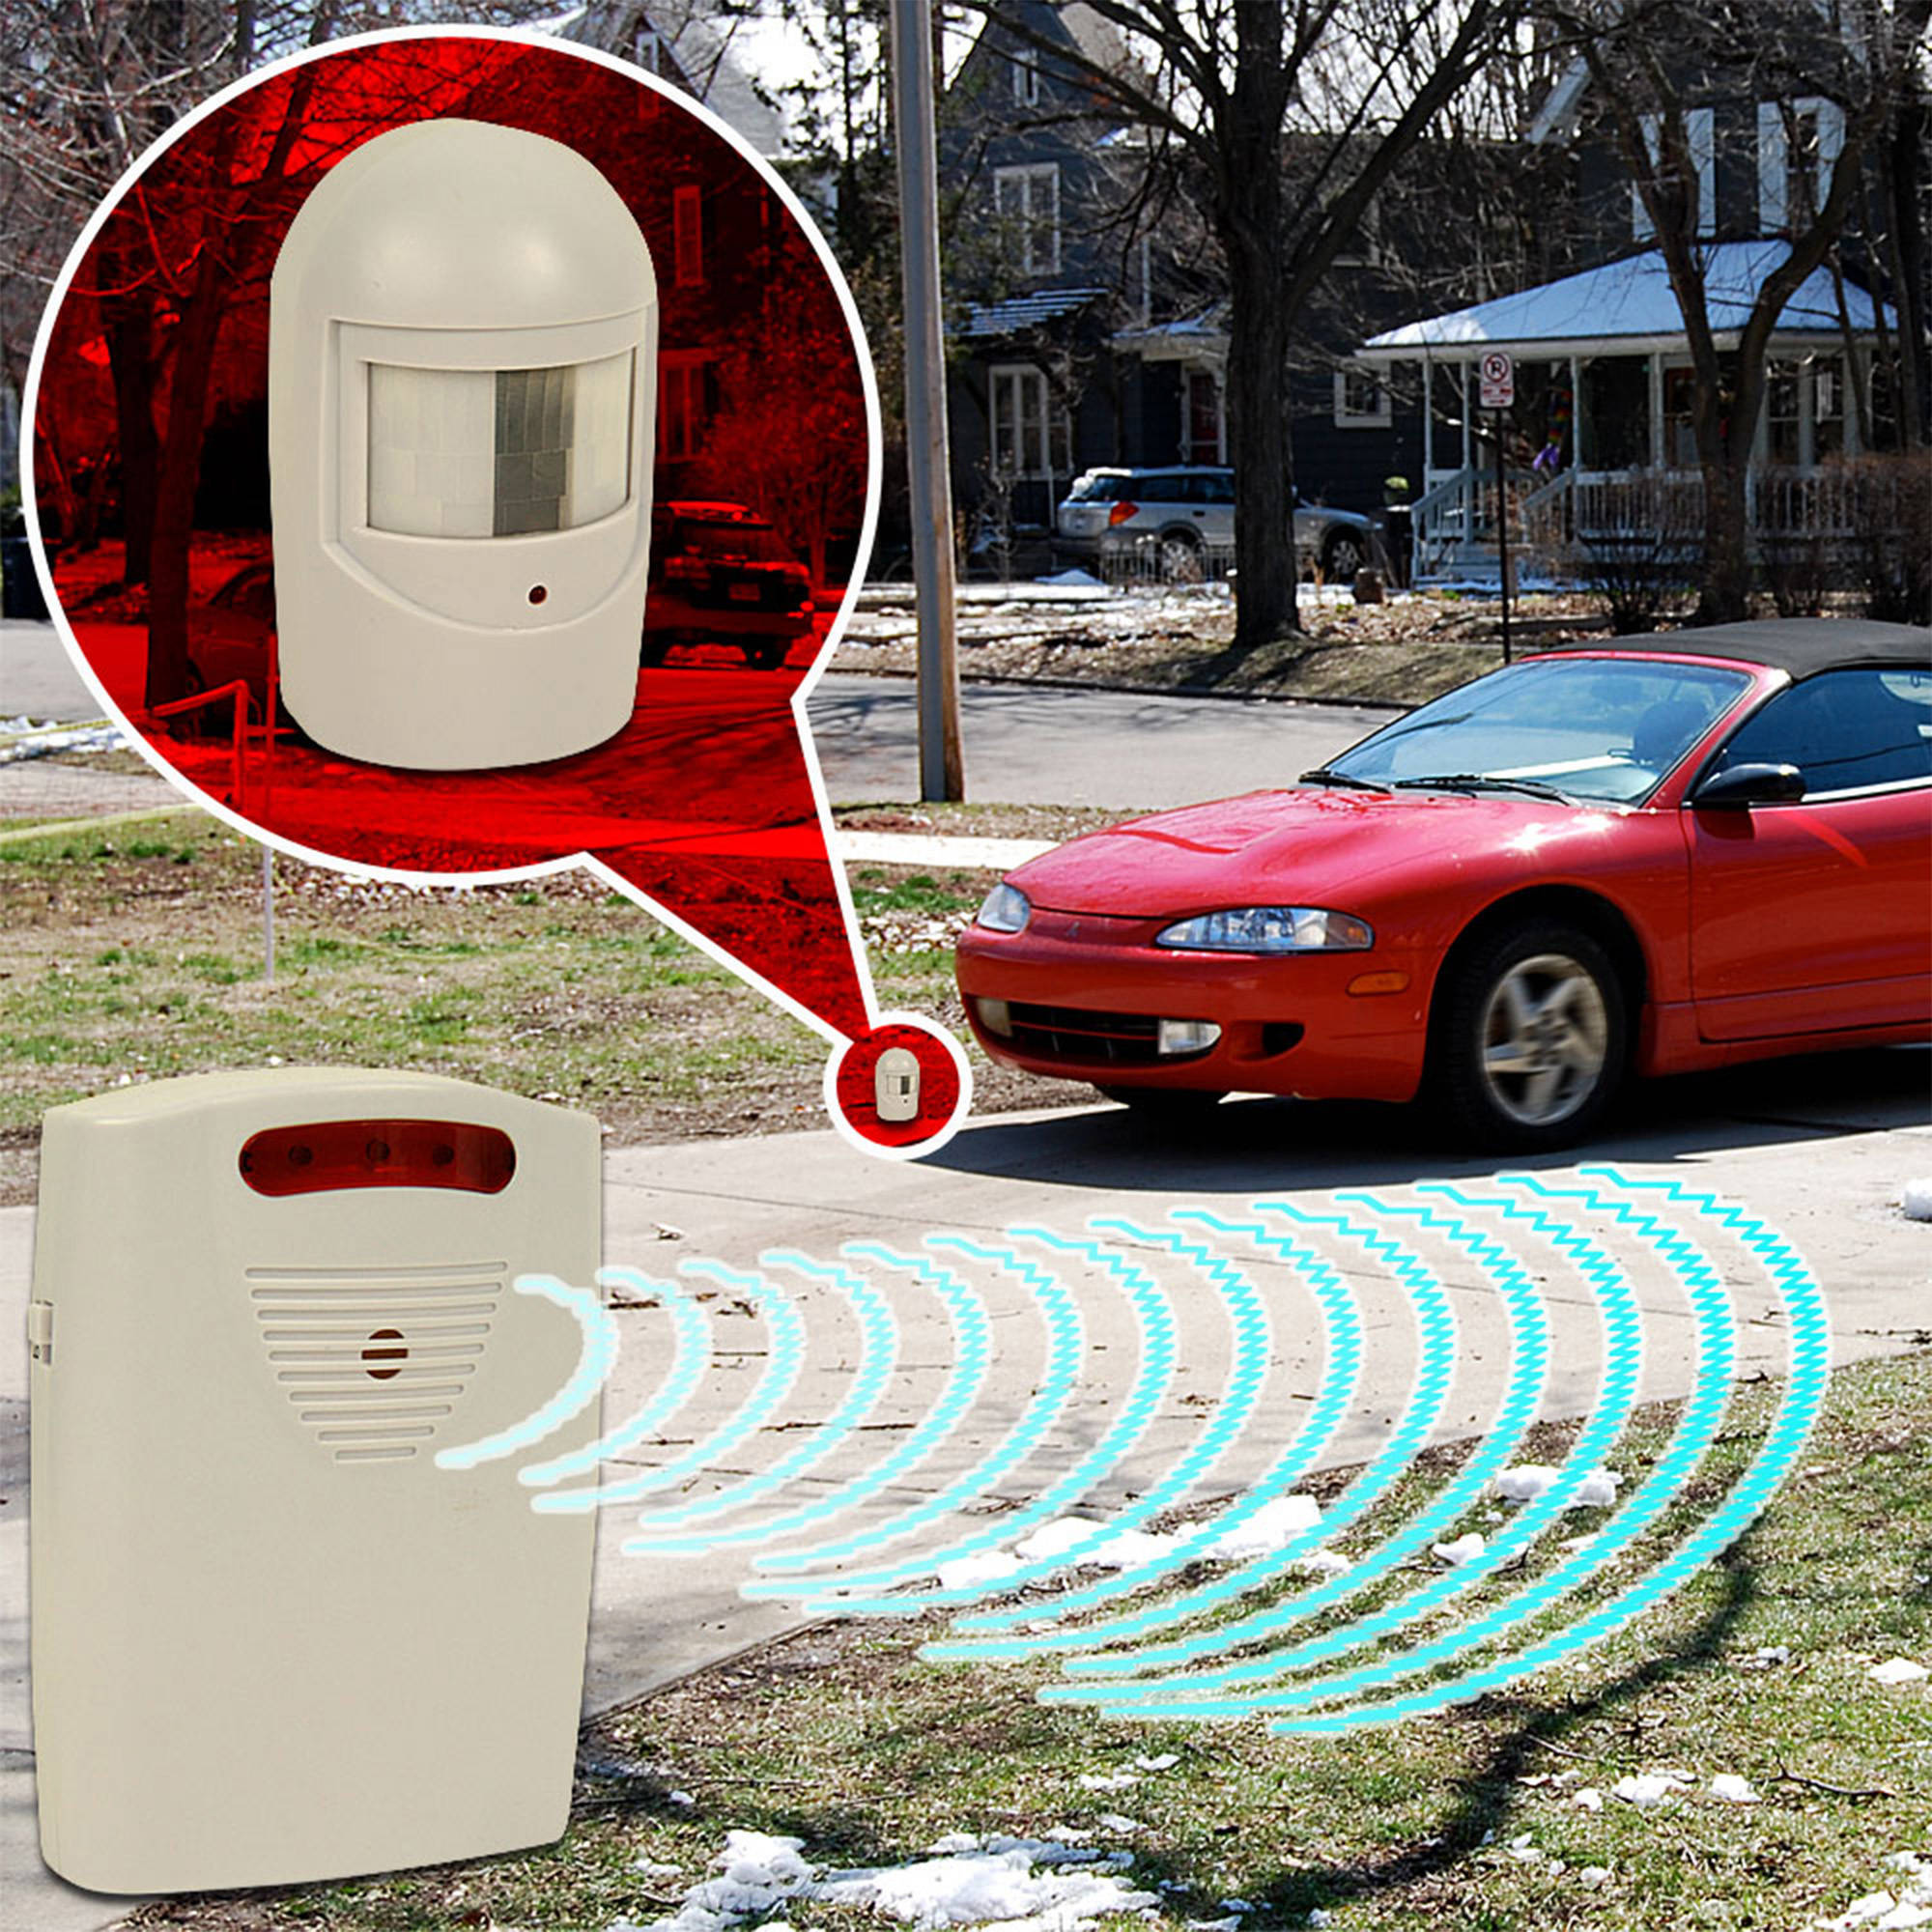 Trademark Driveway Patrol Infrared Wireless Home Security Alarm ...